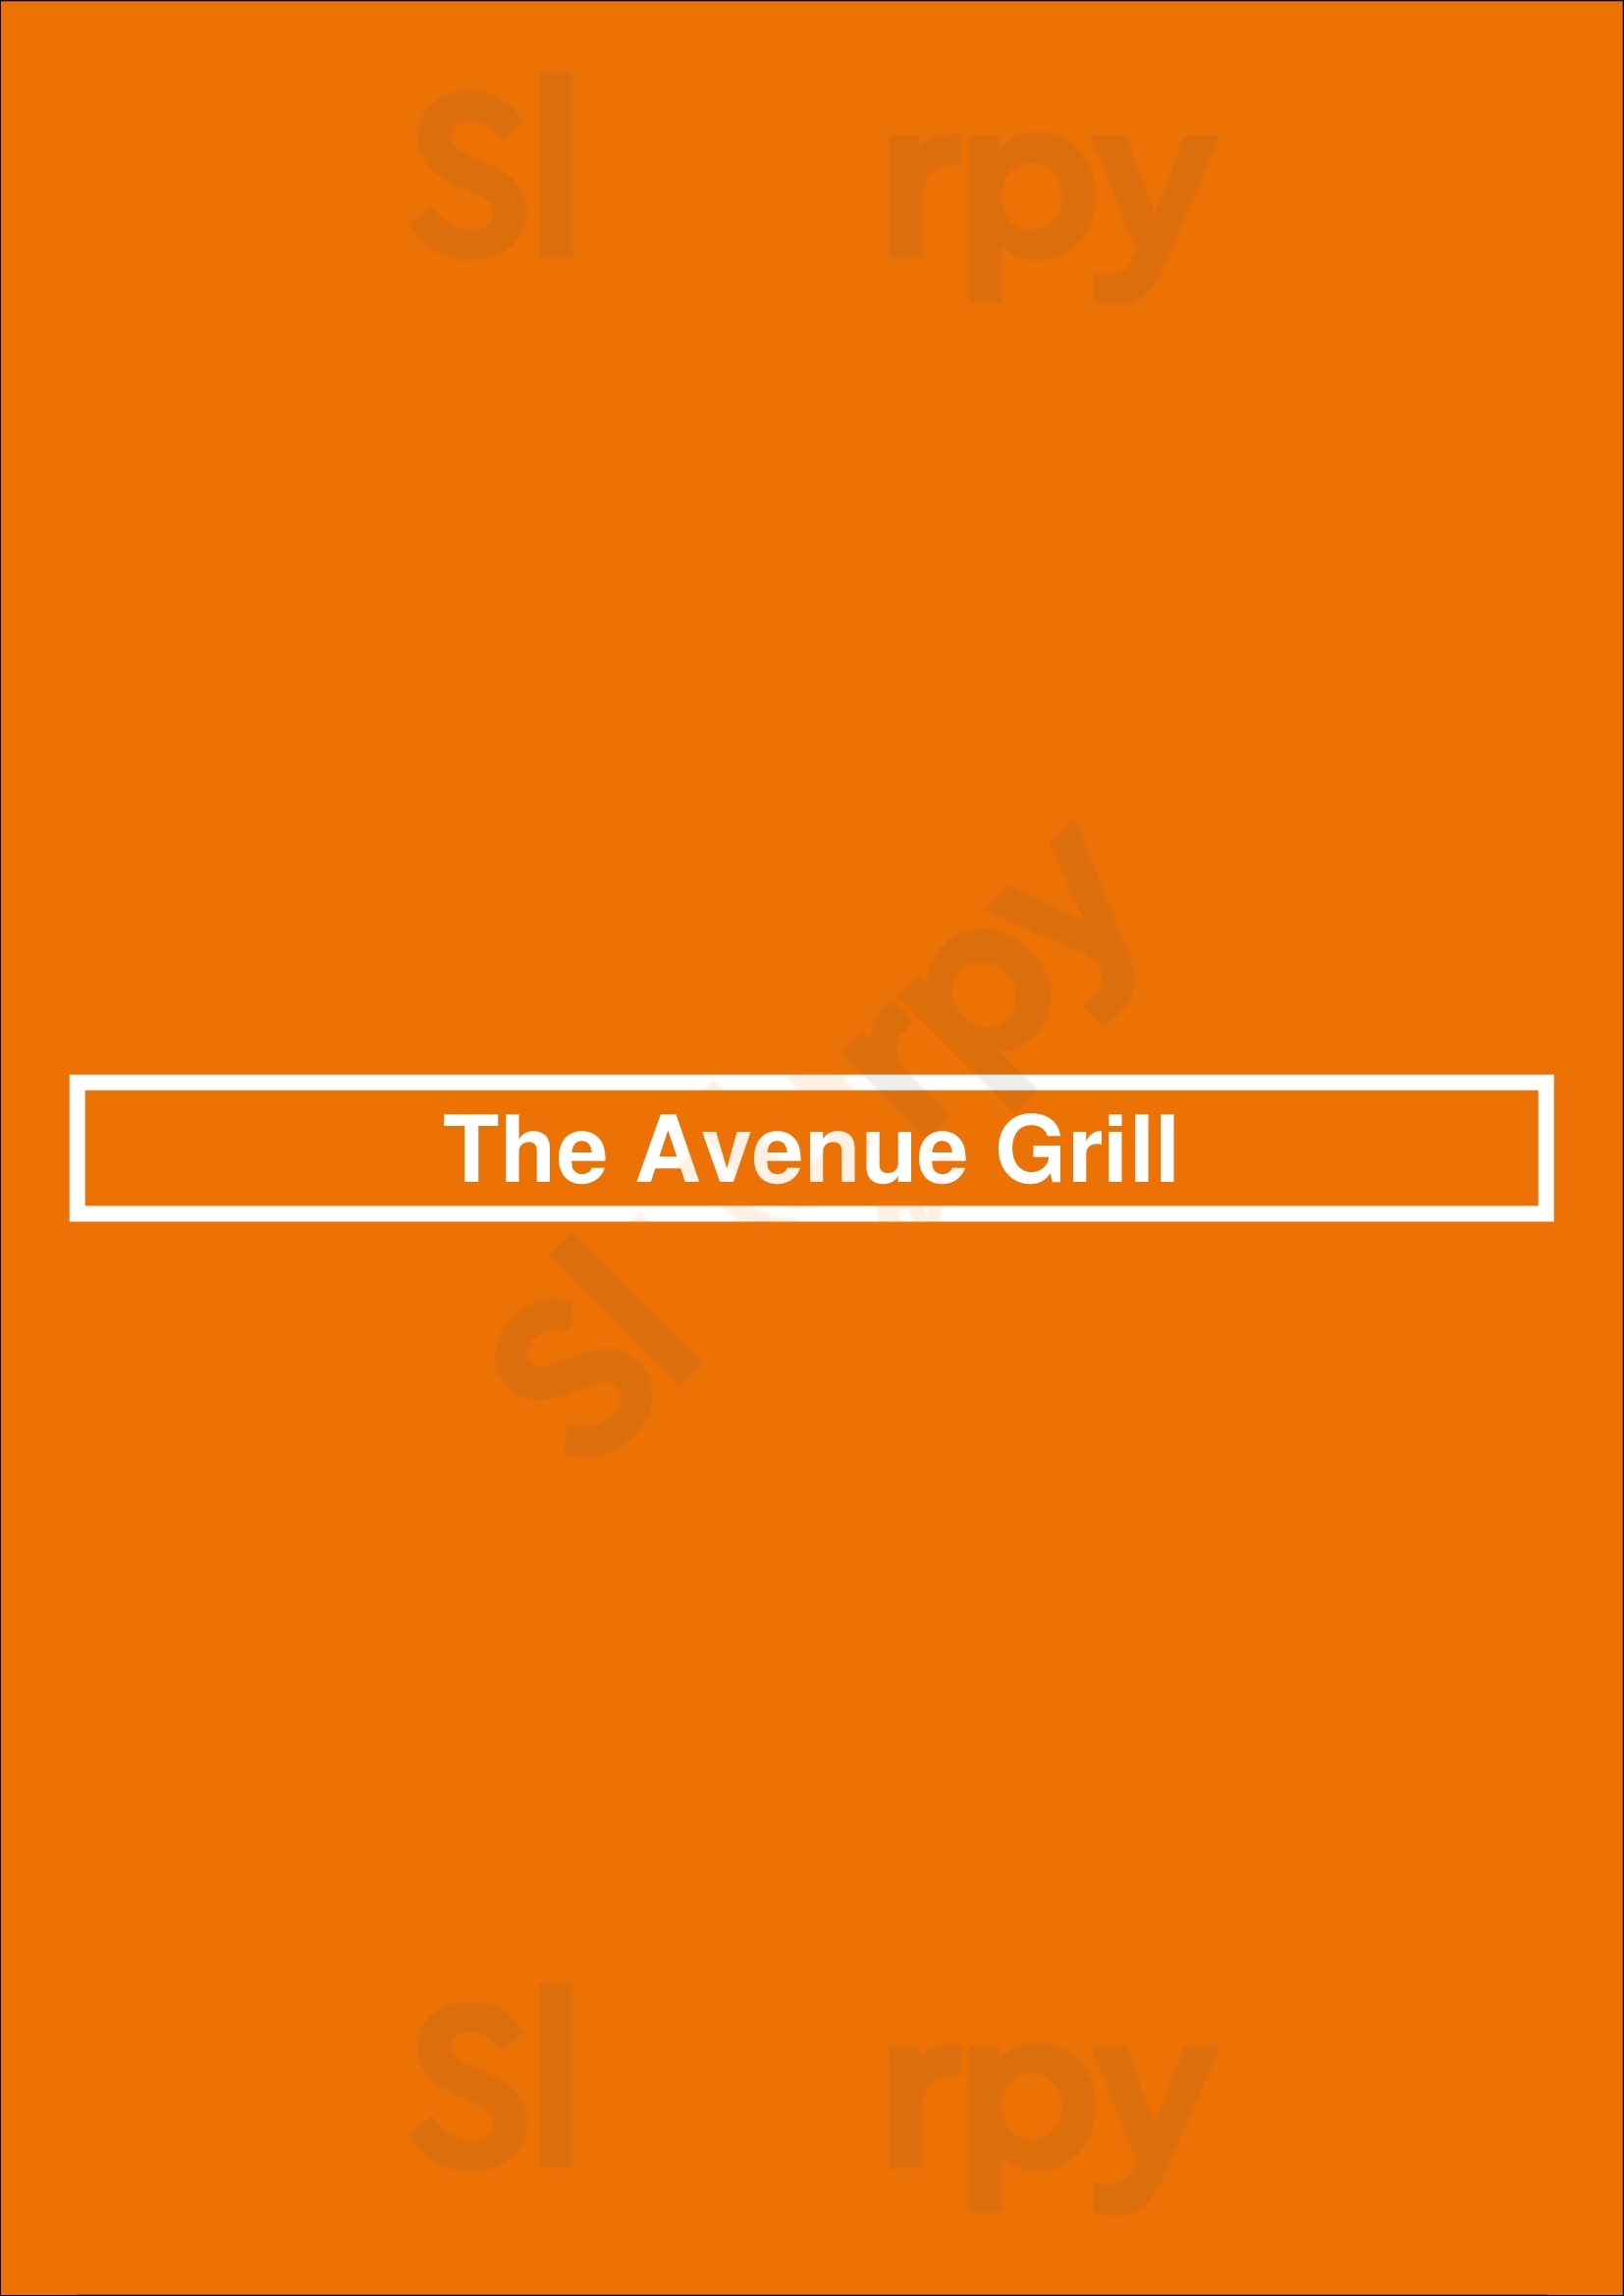 The Avenue Grill Denver Menu - 1